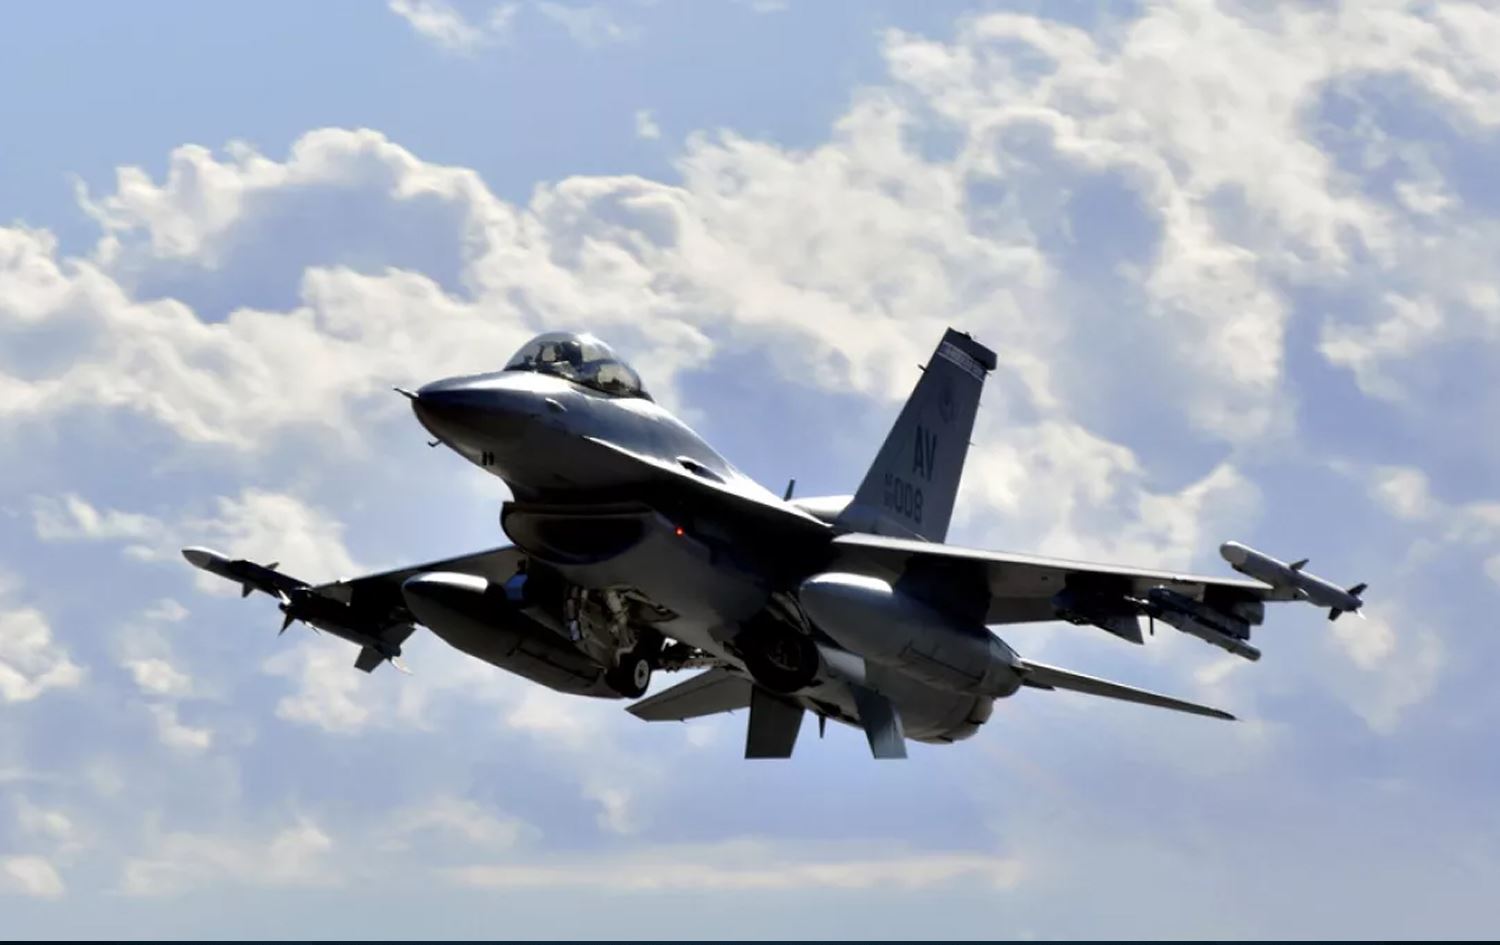 Yunanistan’a ait F-16 savaş uçağı, Ege’ye düştü!